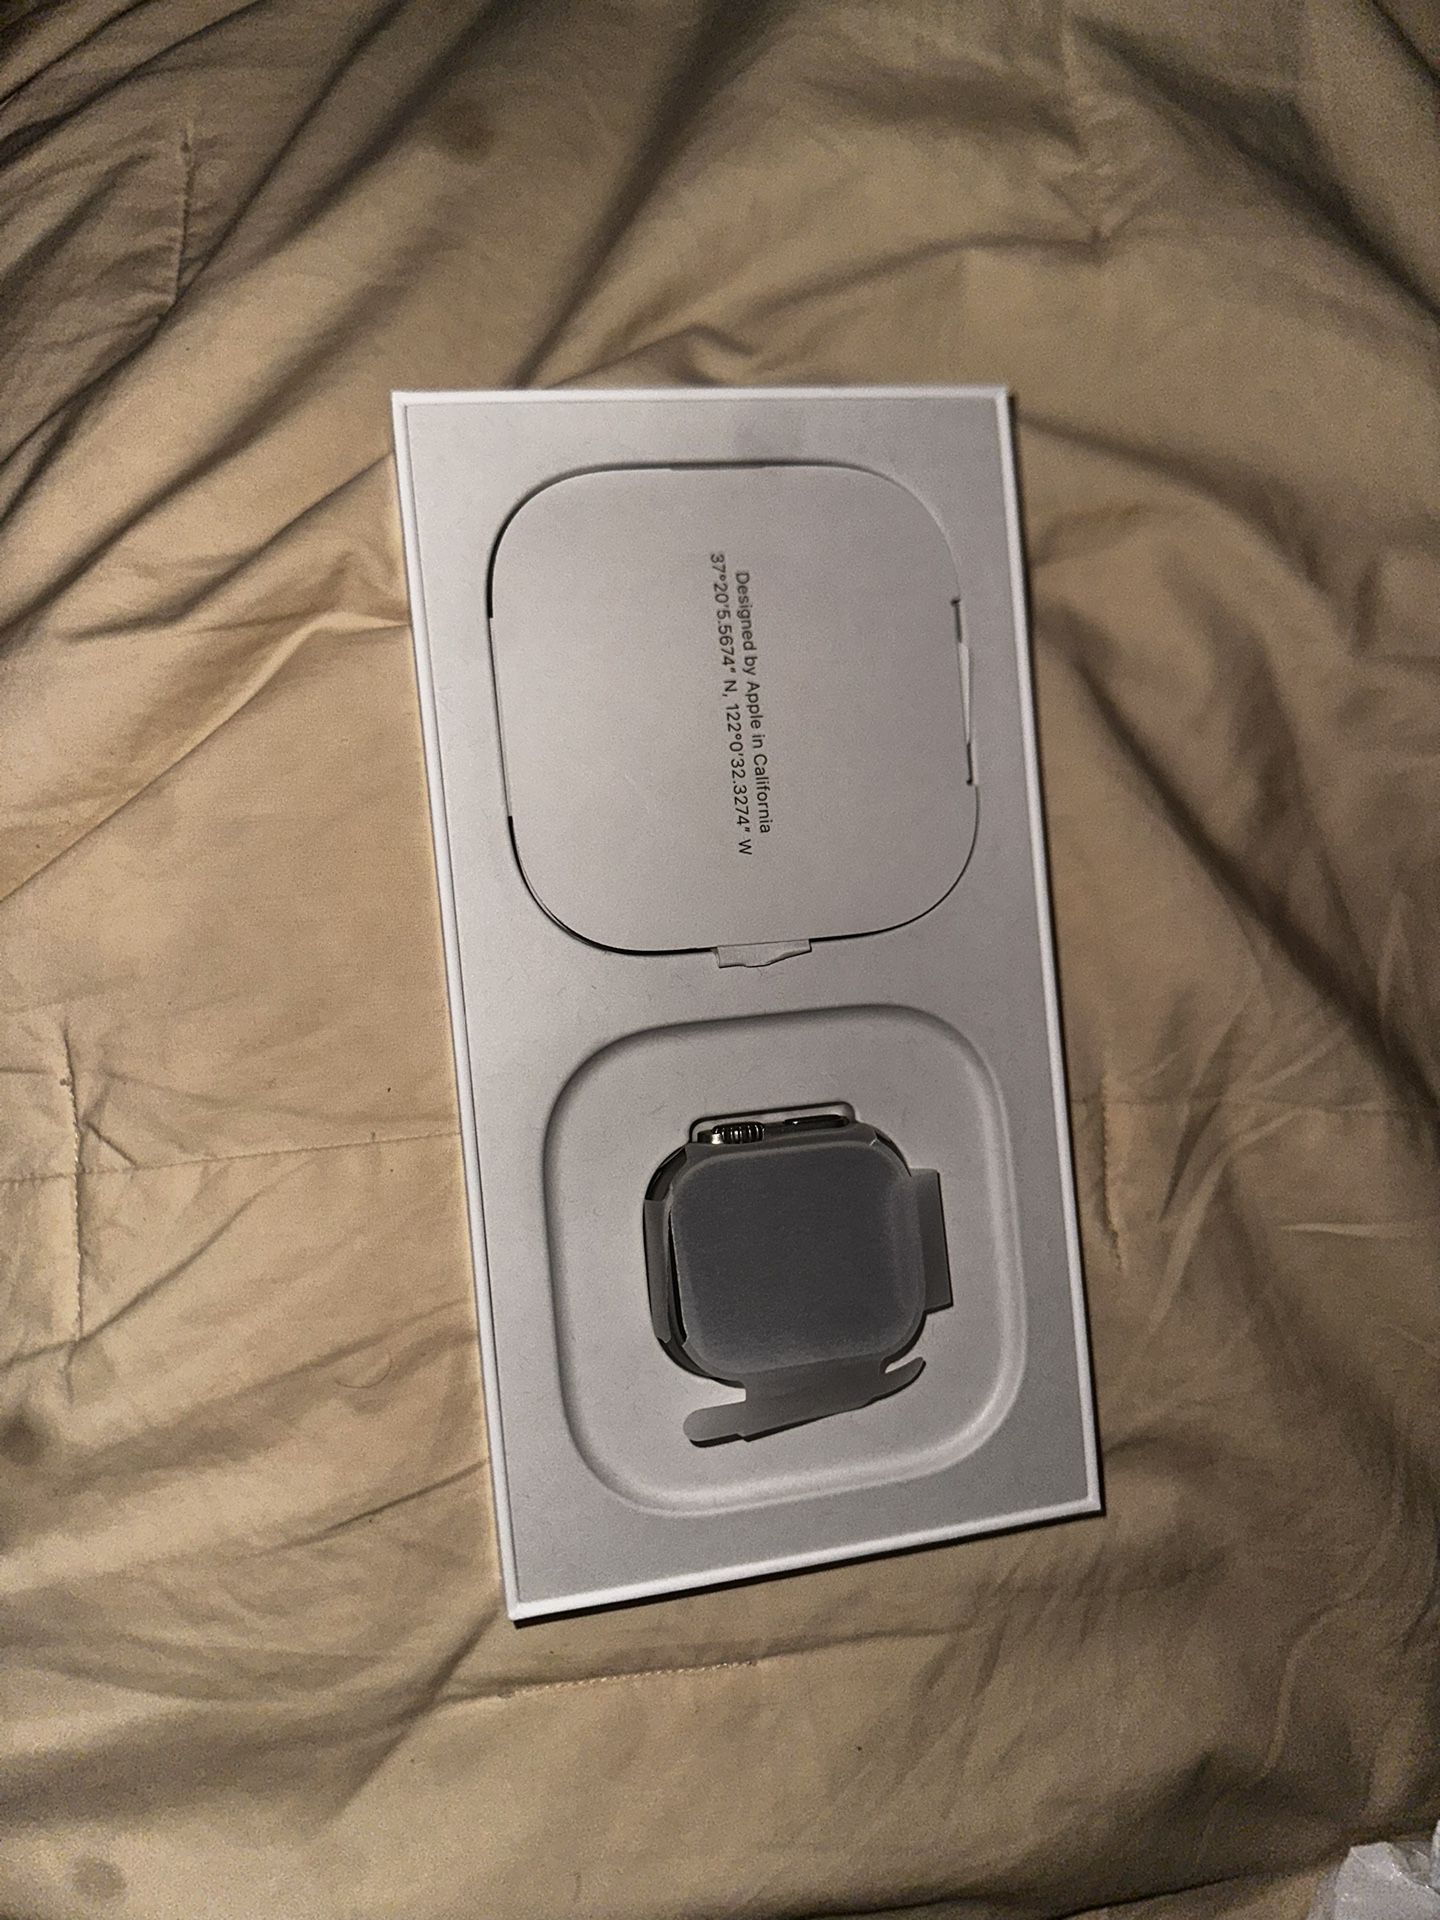 Apple Watch Ultra Series 2